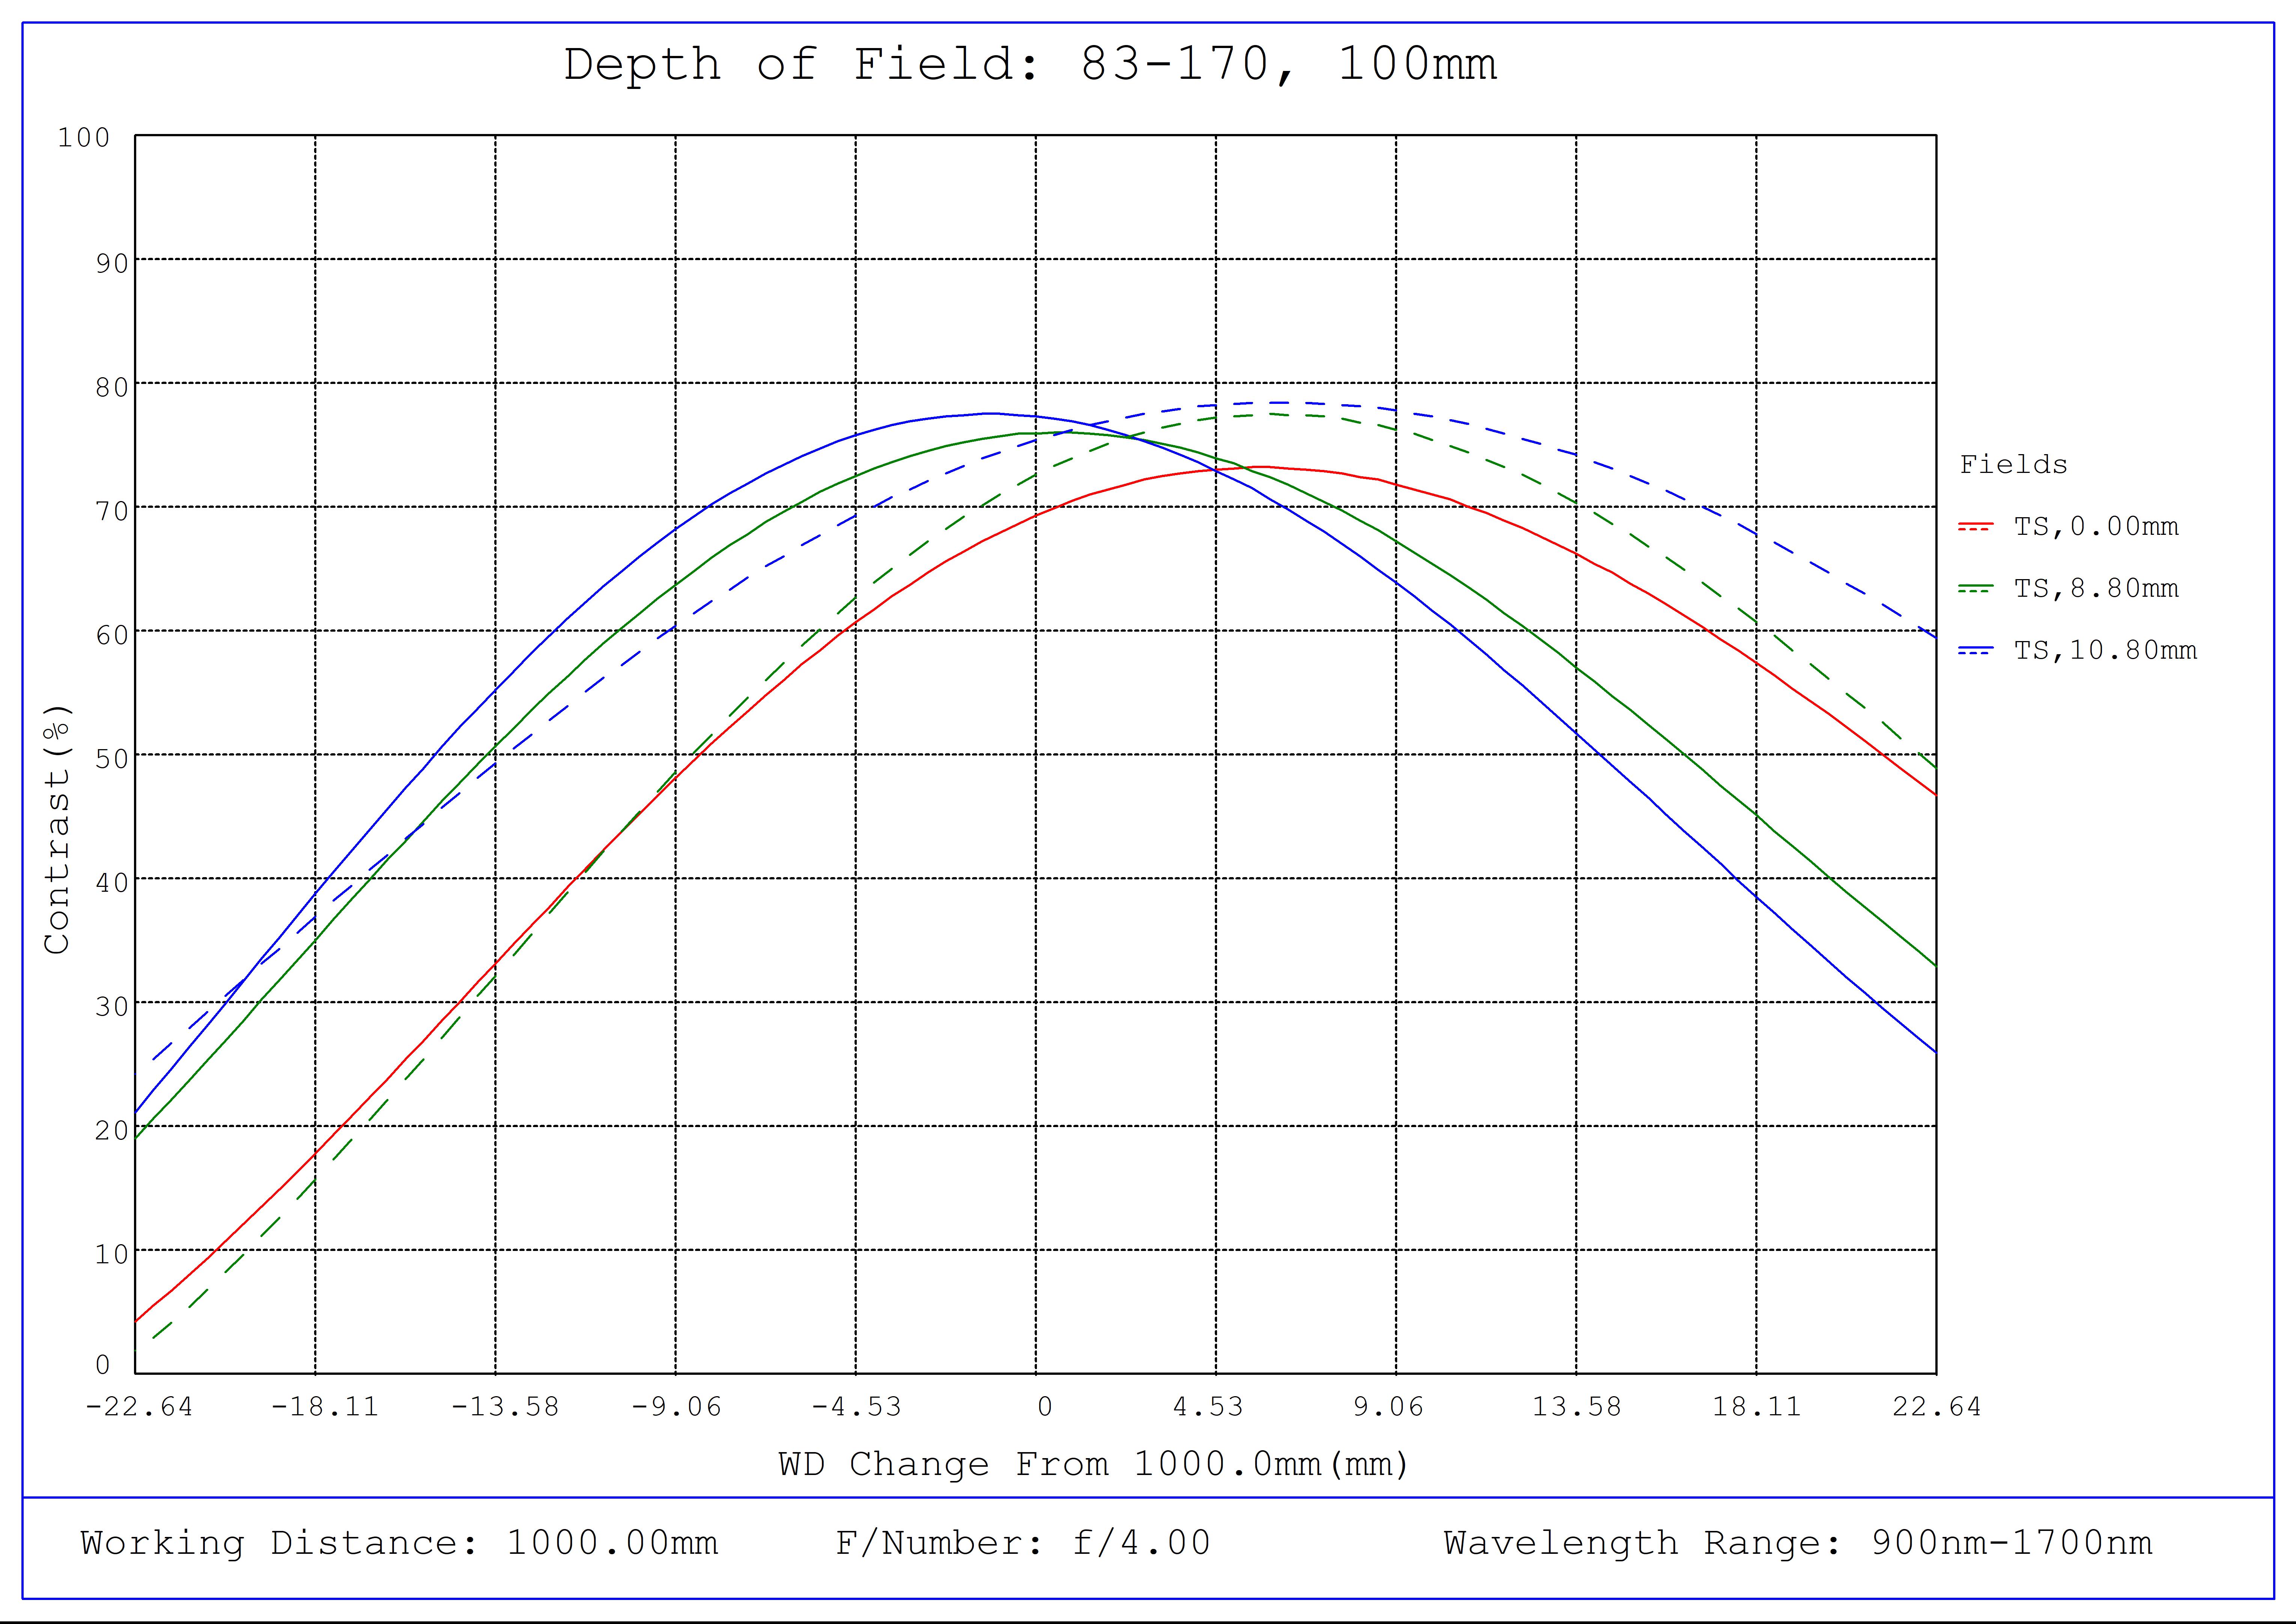 #83-170, 100mm SWIR Series Fixed Focal Length Lens, C-Mount, Depth of Field Plot, 1000mm Working Distance, f4